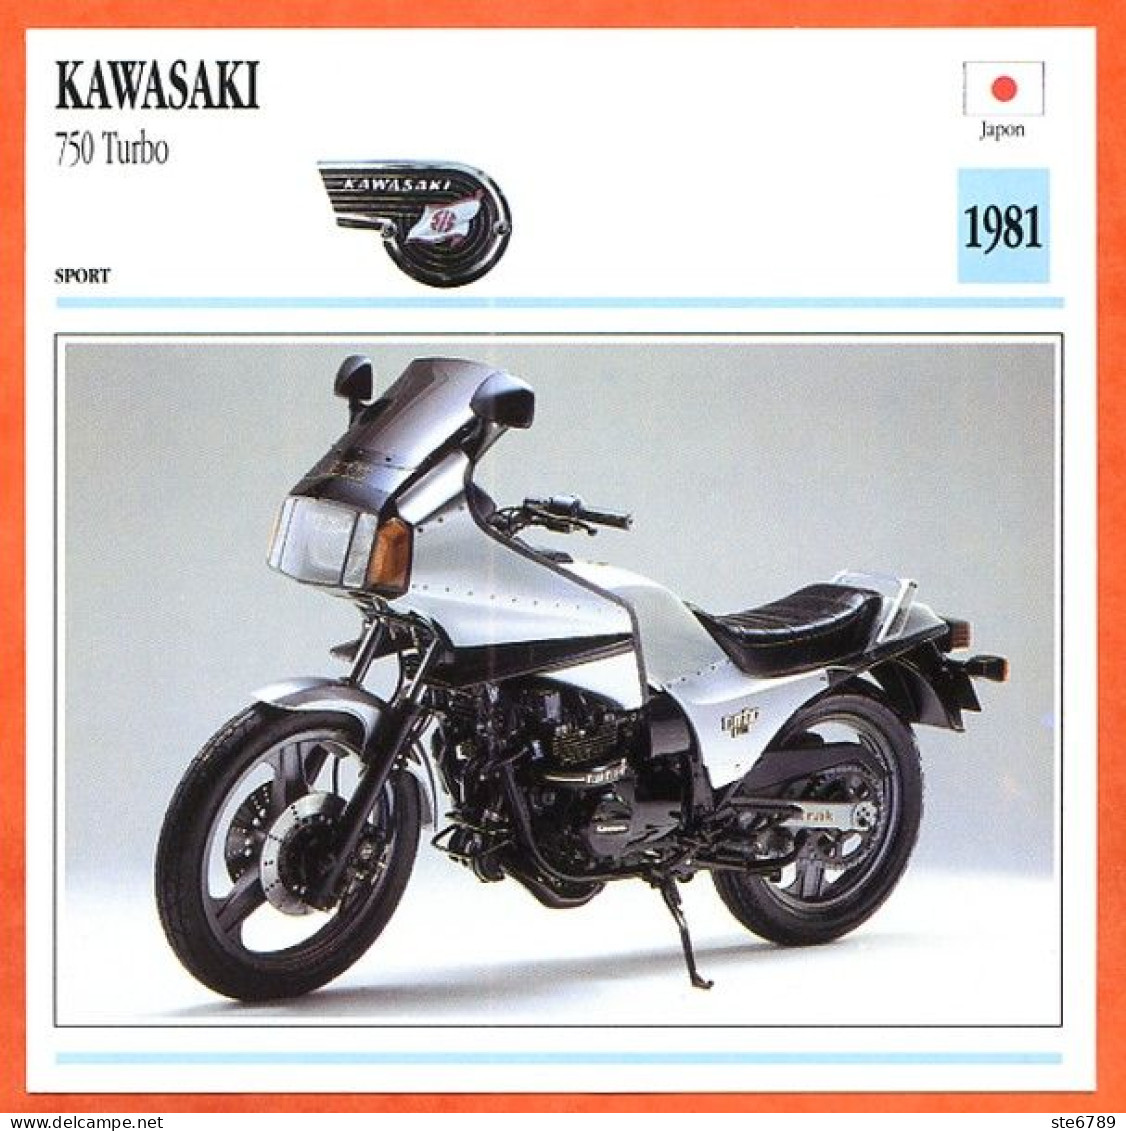 KAWASAKI 750 Turbo 1981 Japon Fiche Technique Moto - Sport